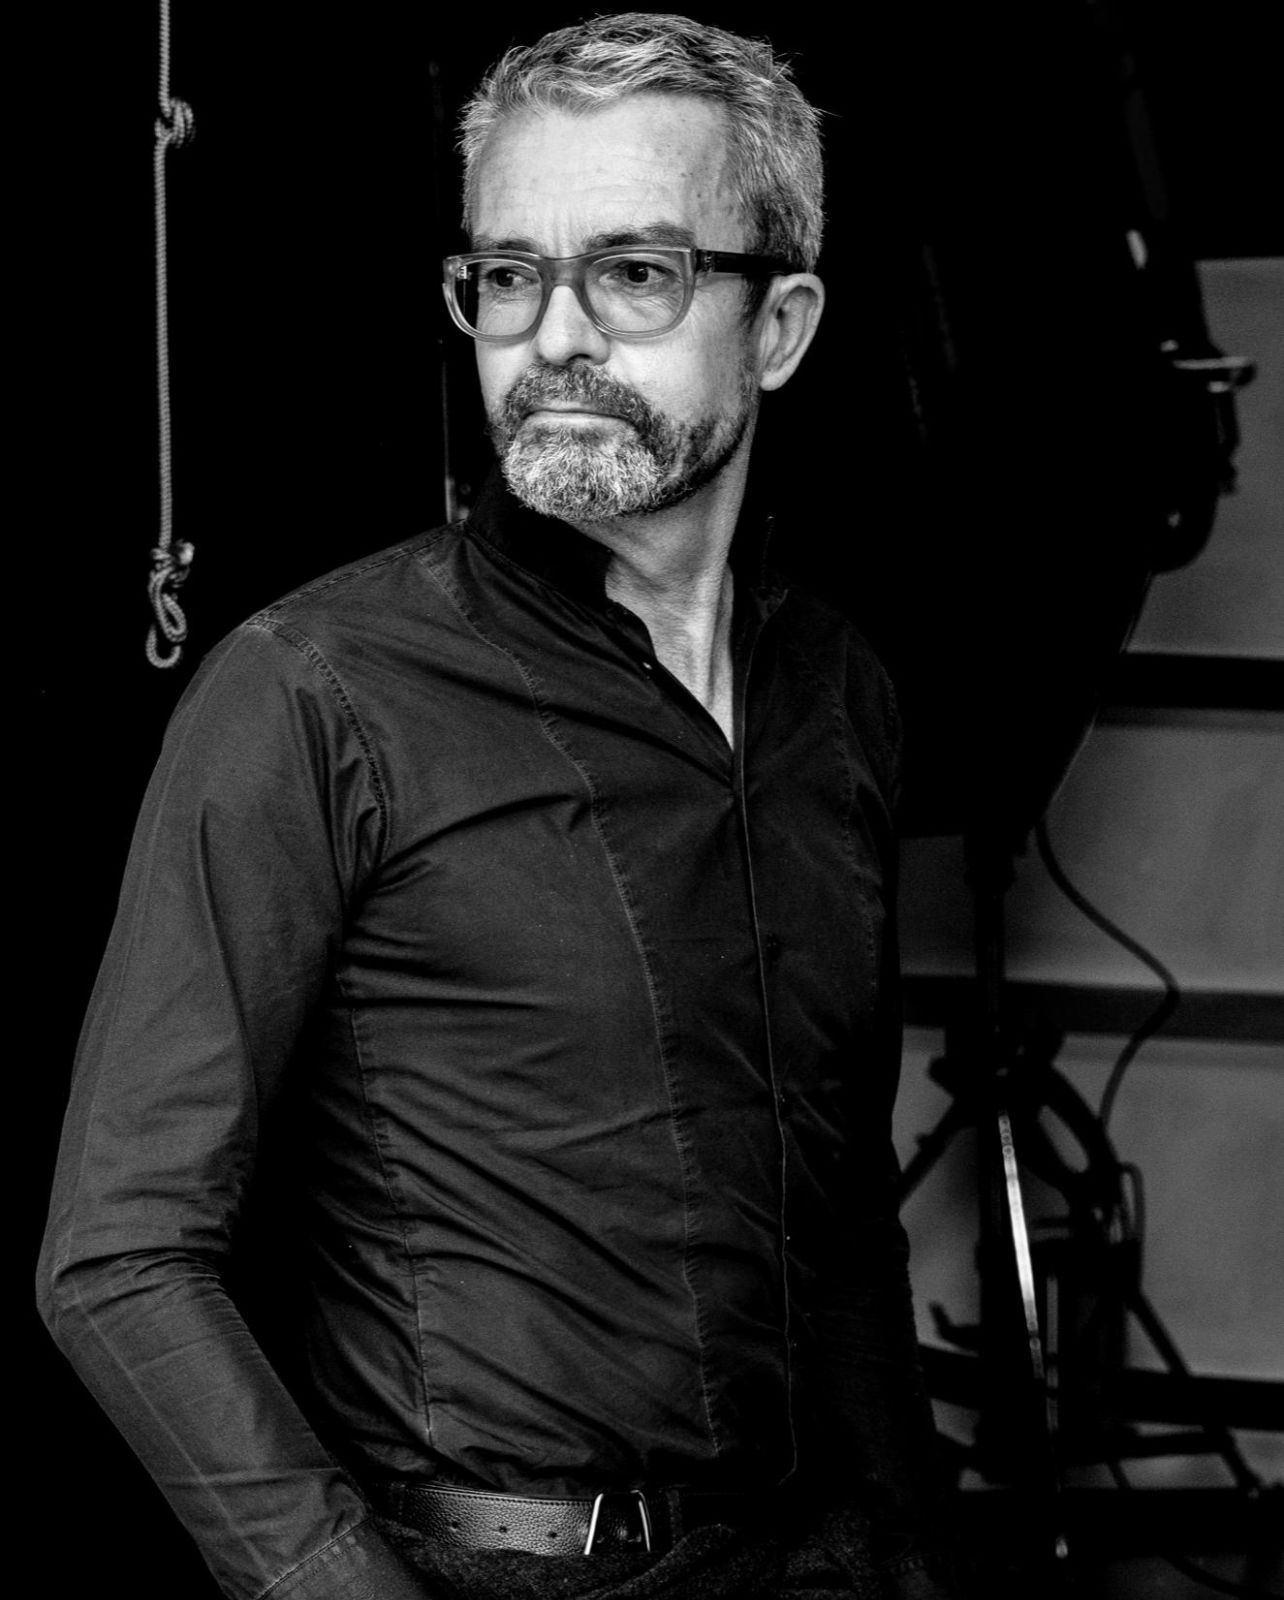 Black and white portrait image of Akris’s creative director Albert Kriemler